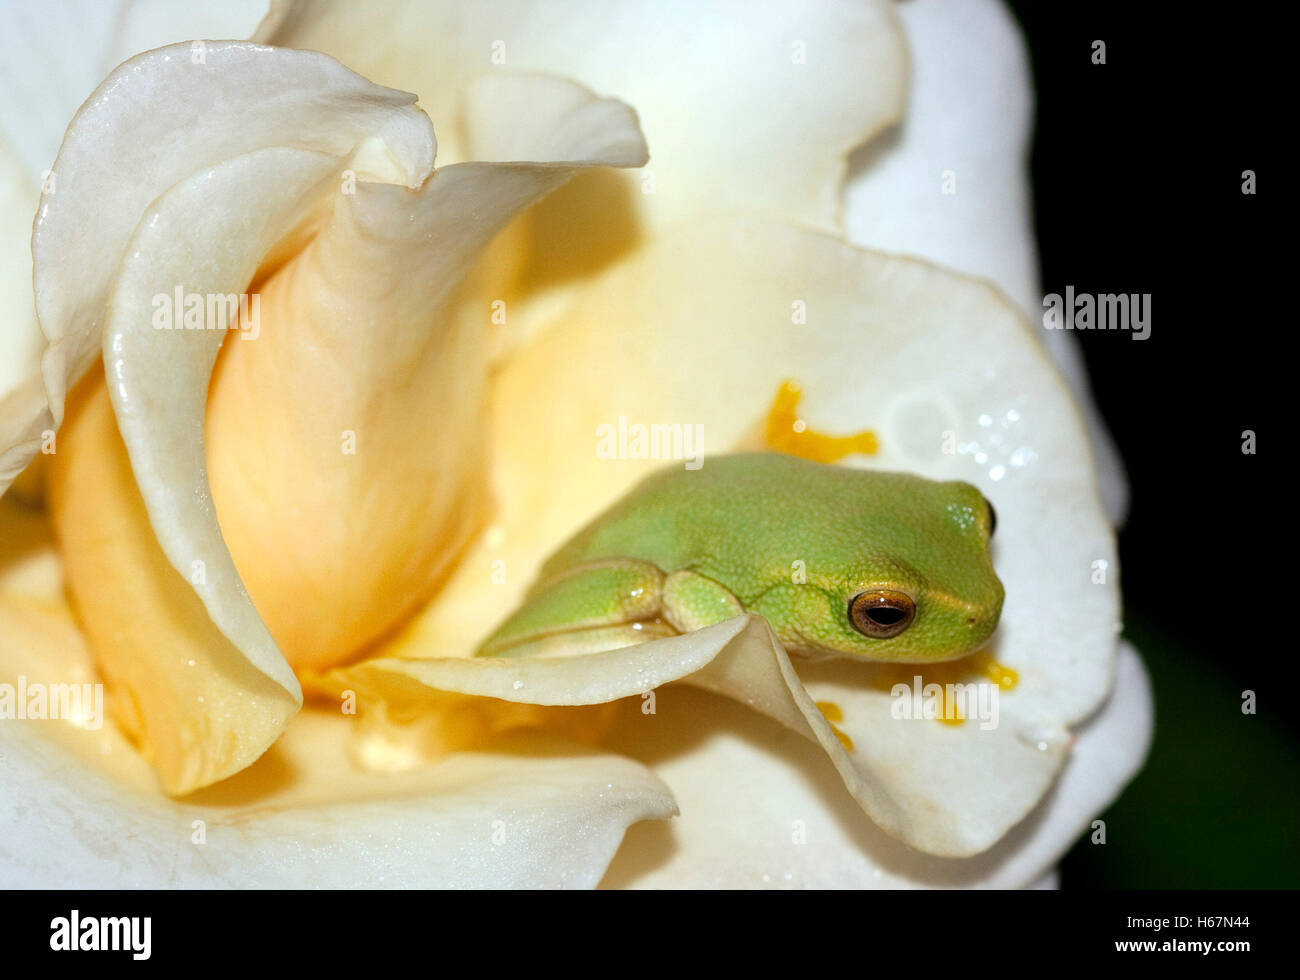 Tiny vivid green Australian dainty tree frog, Litoria gracilenta among pale yellow to white petals of rose on black background Stock Photo